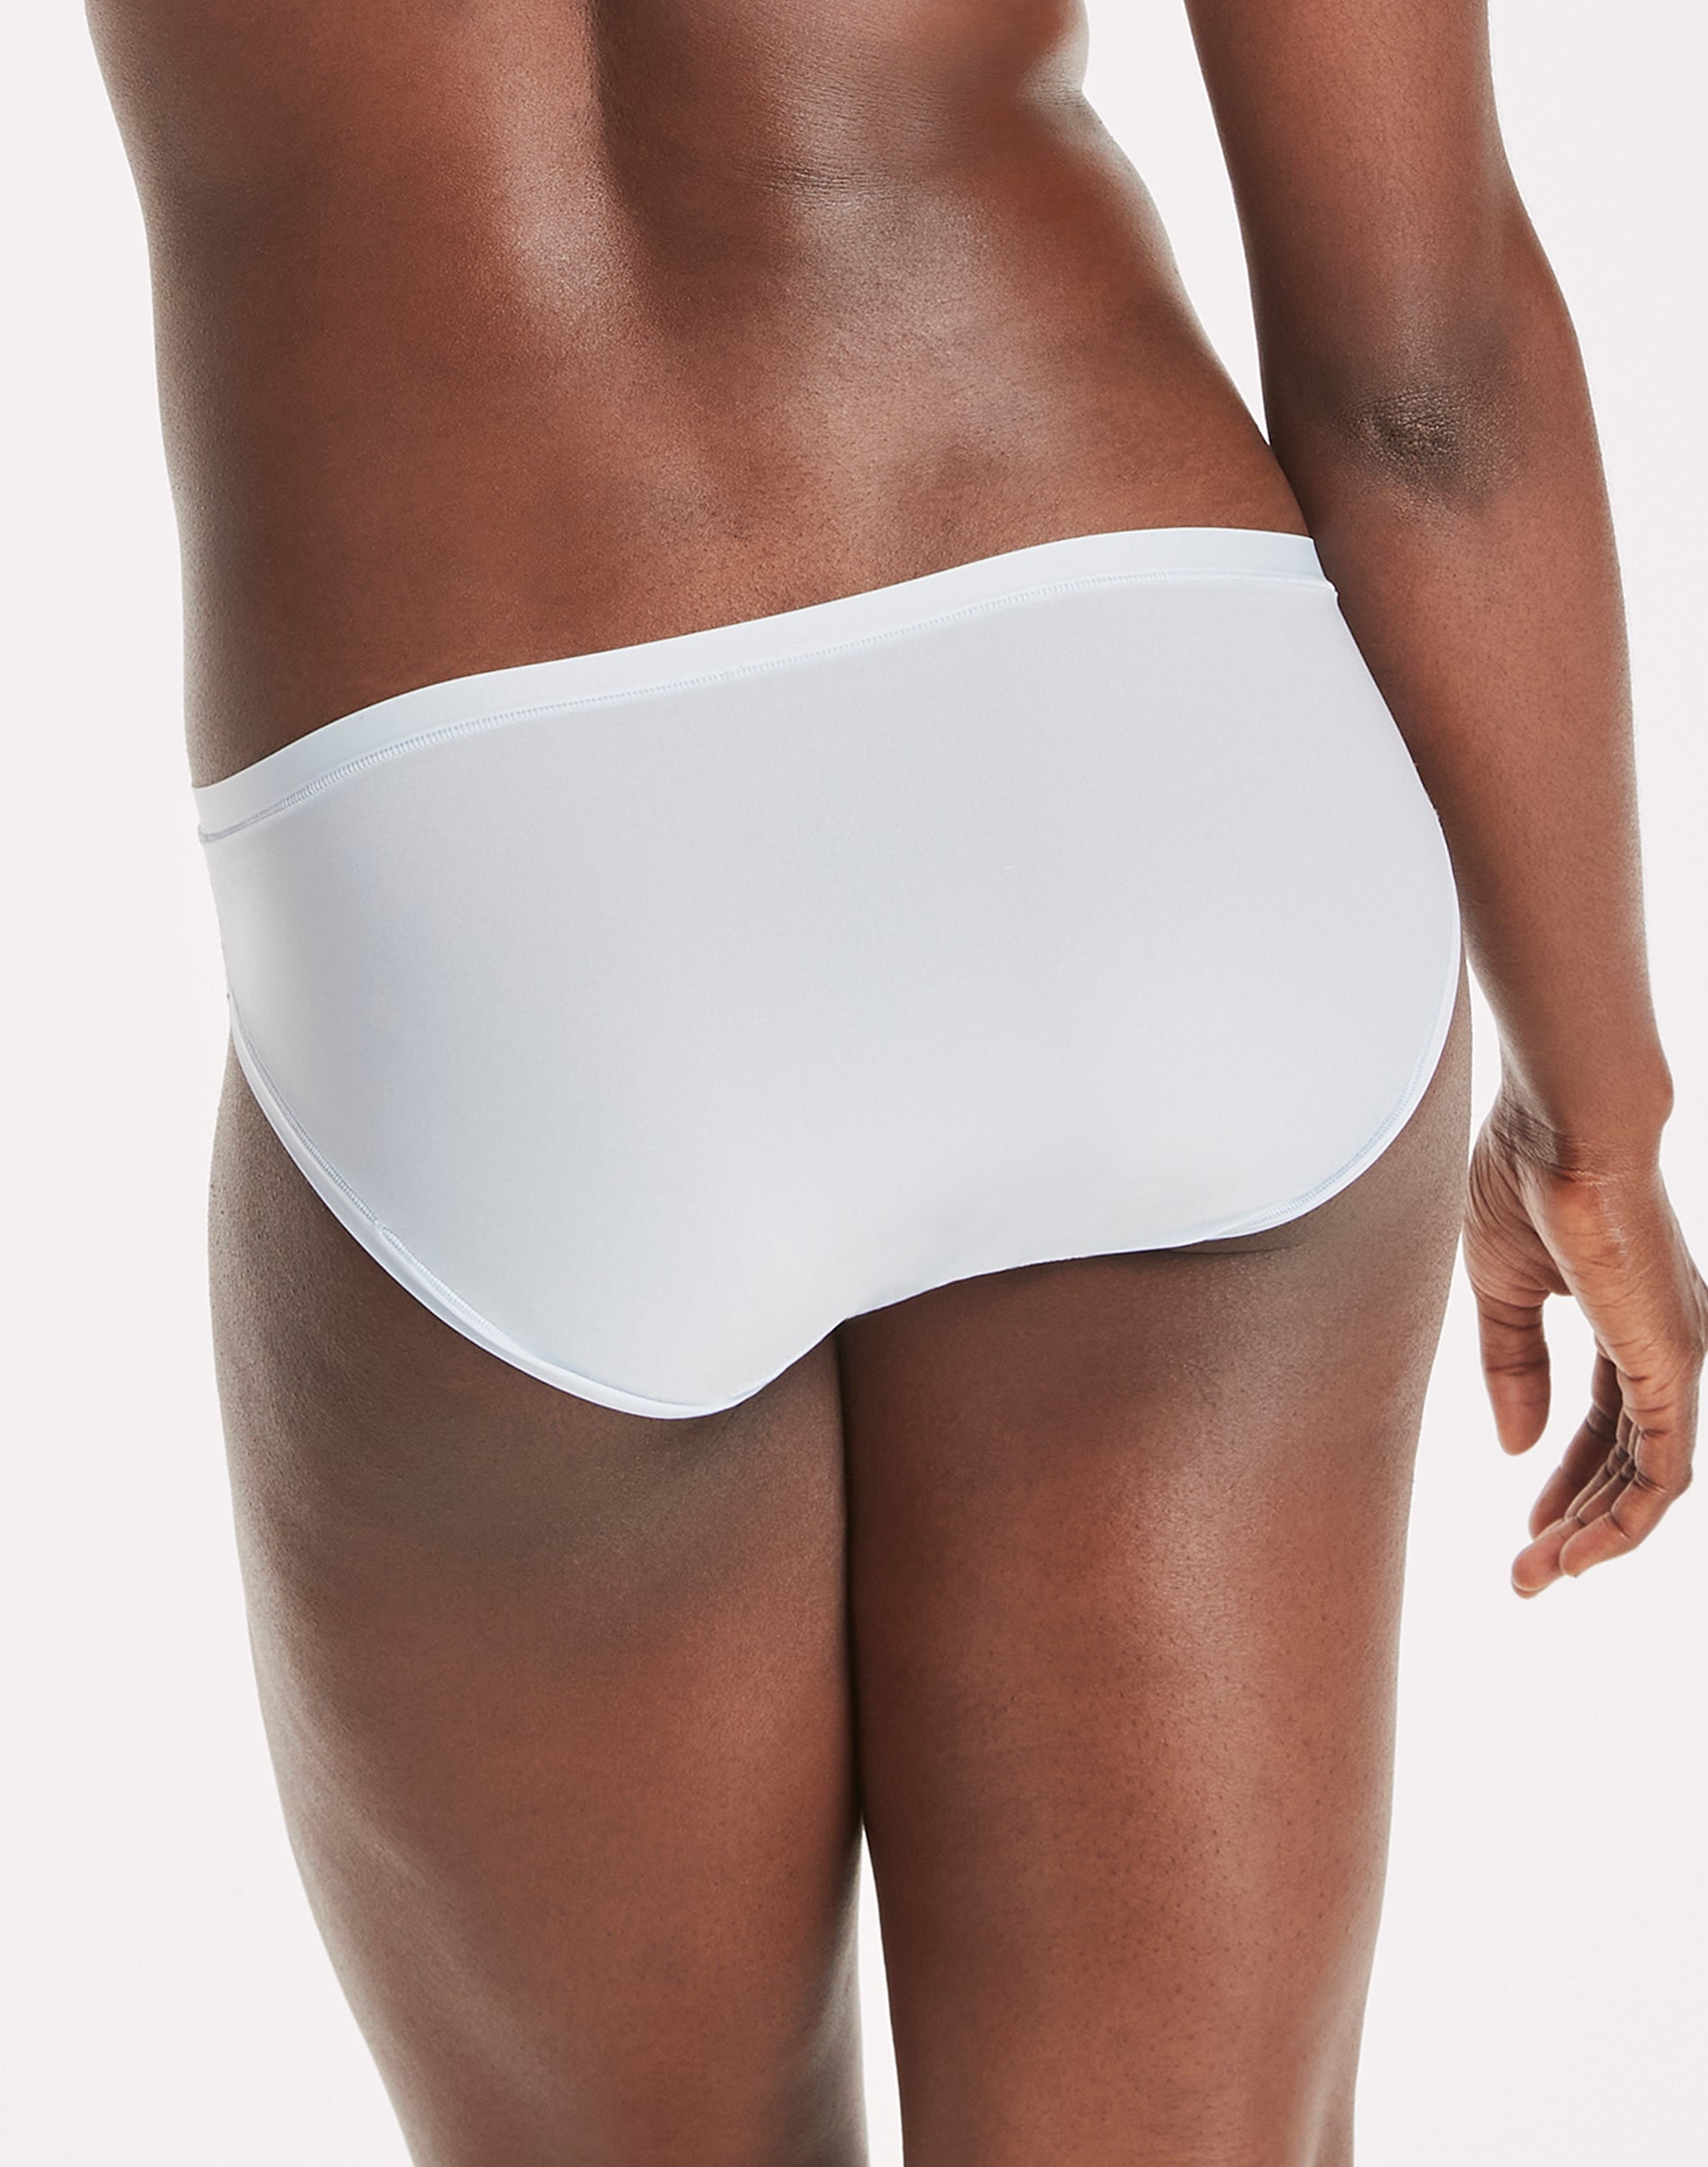 Hanes Women's Seamless Bikini Underwear, Comfort Flex Fit, 6-Pack